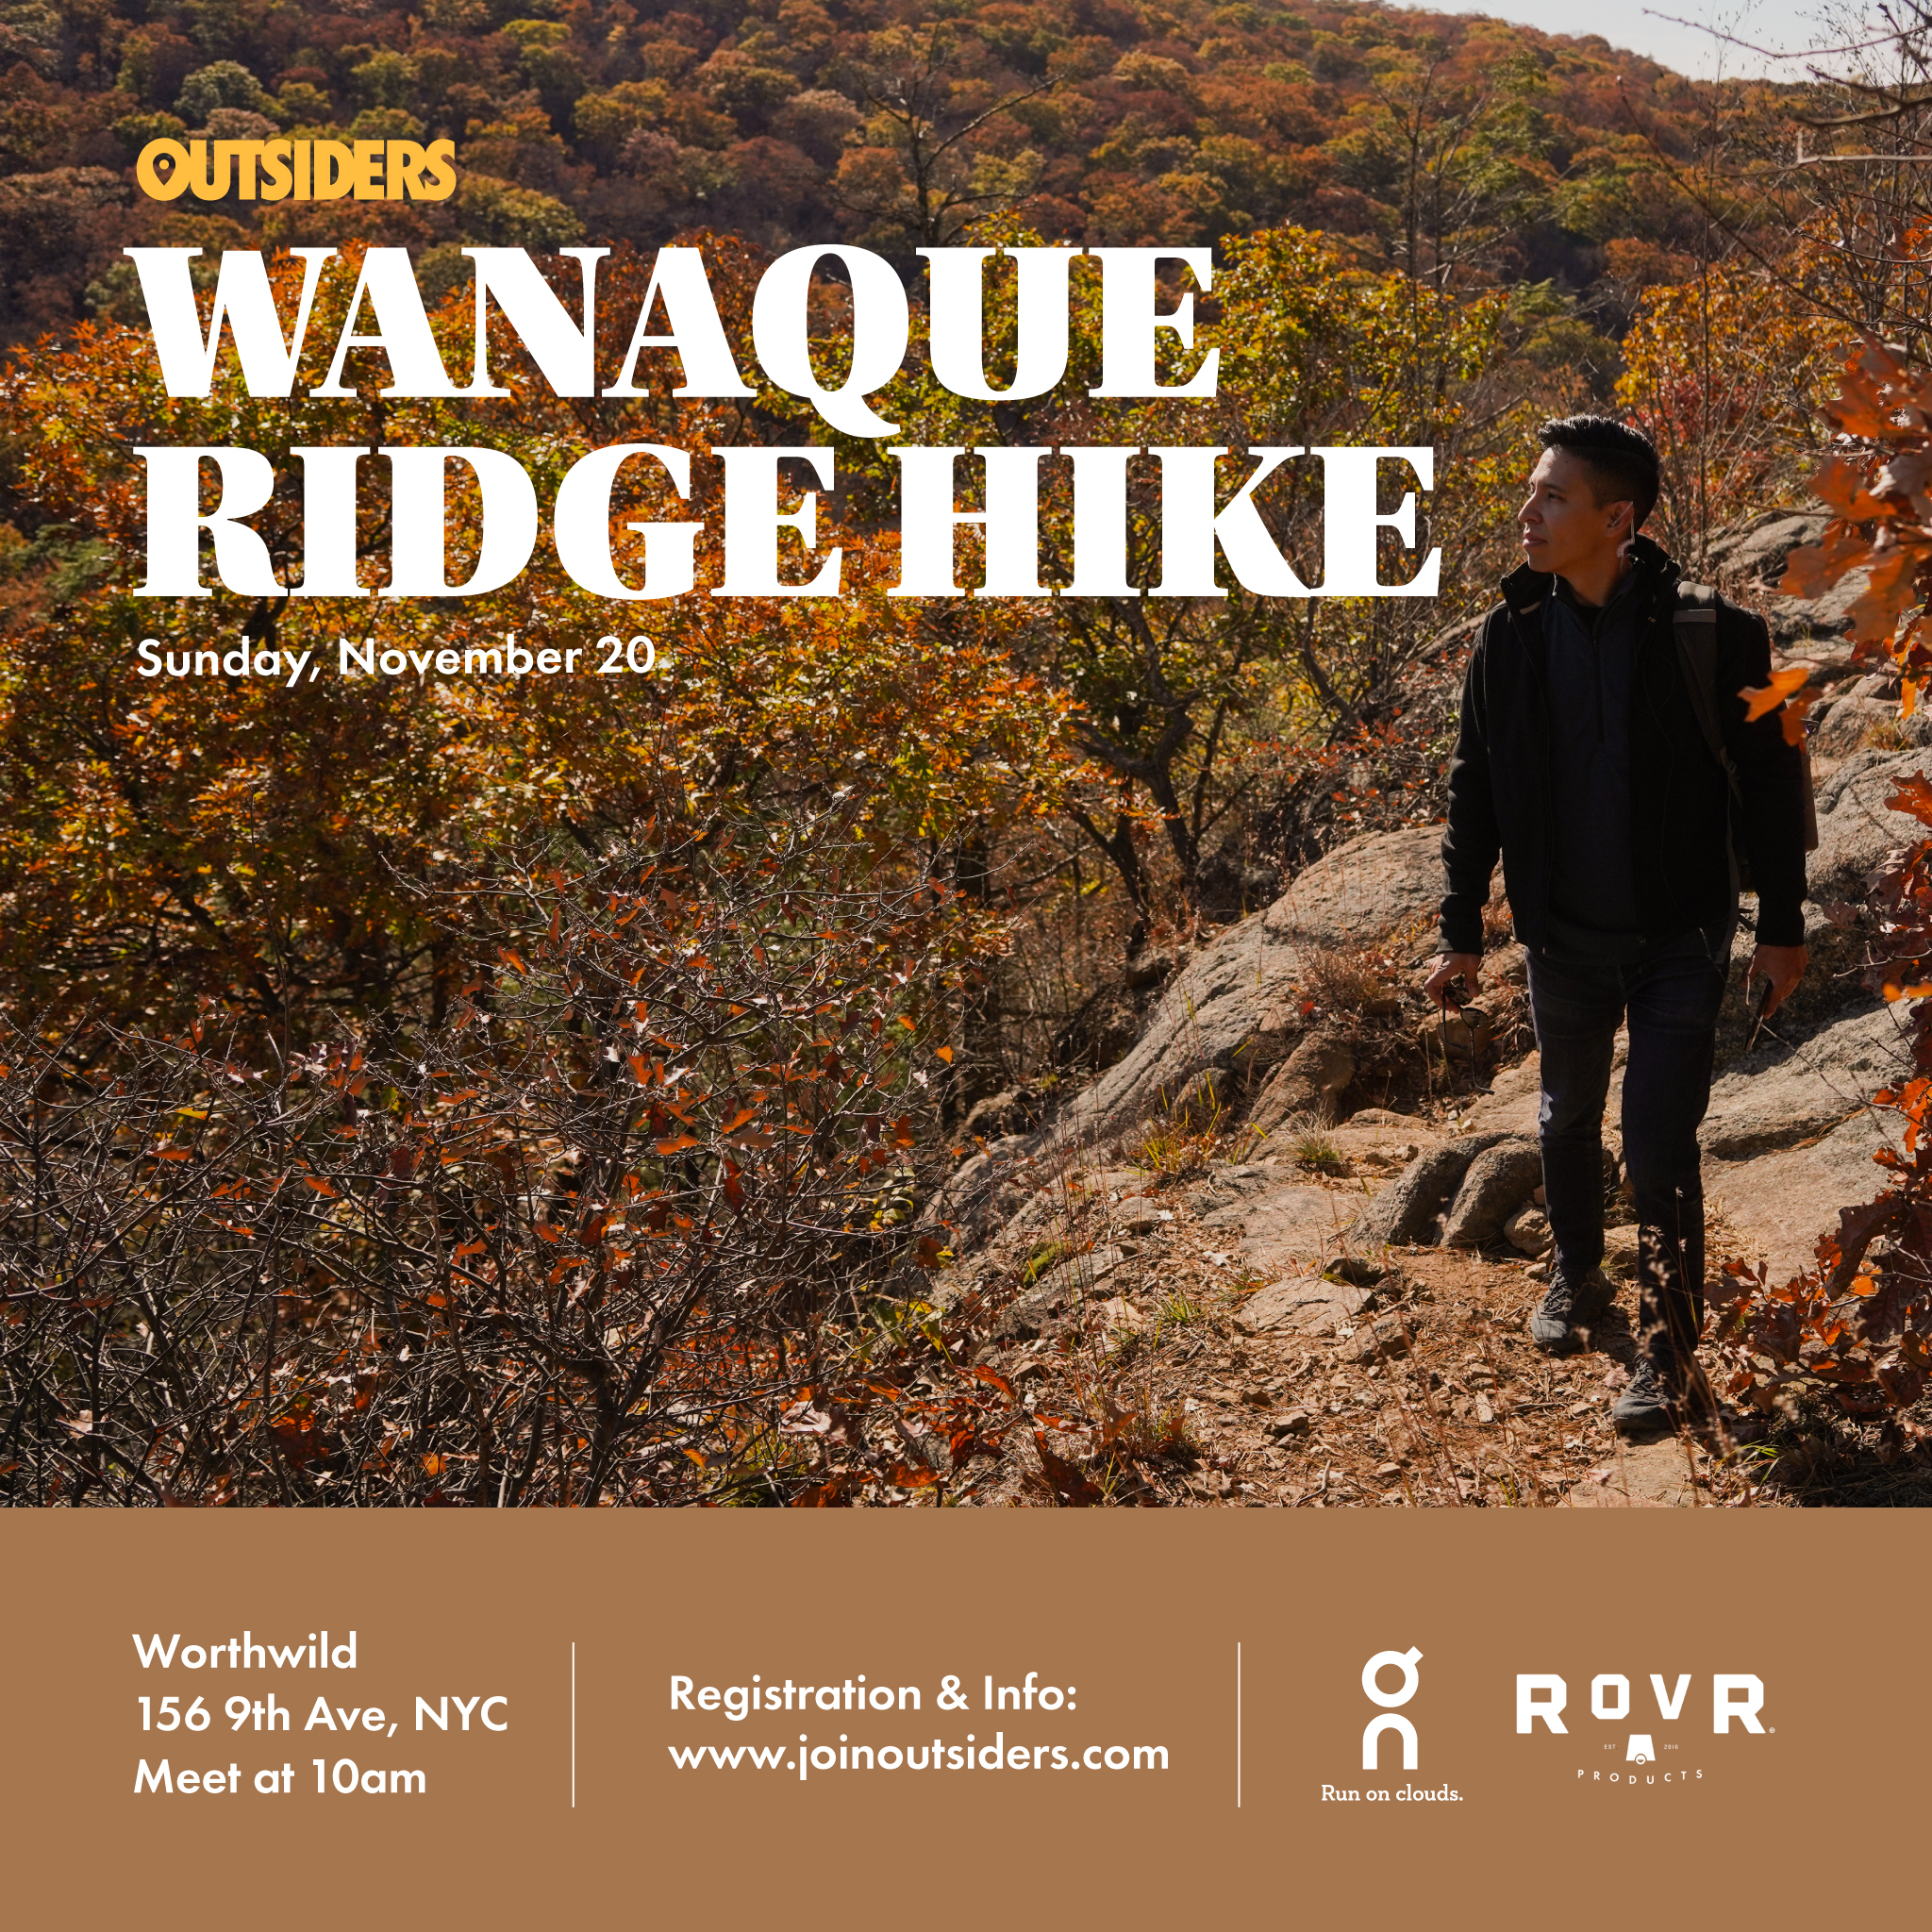 Wanaque Ridge Hike